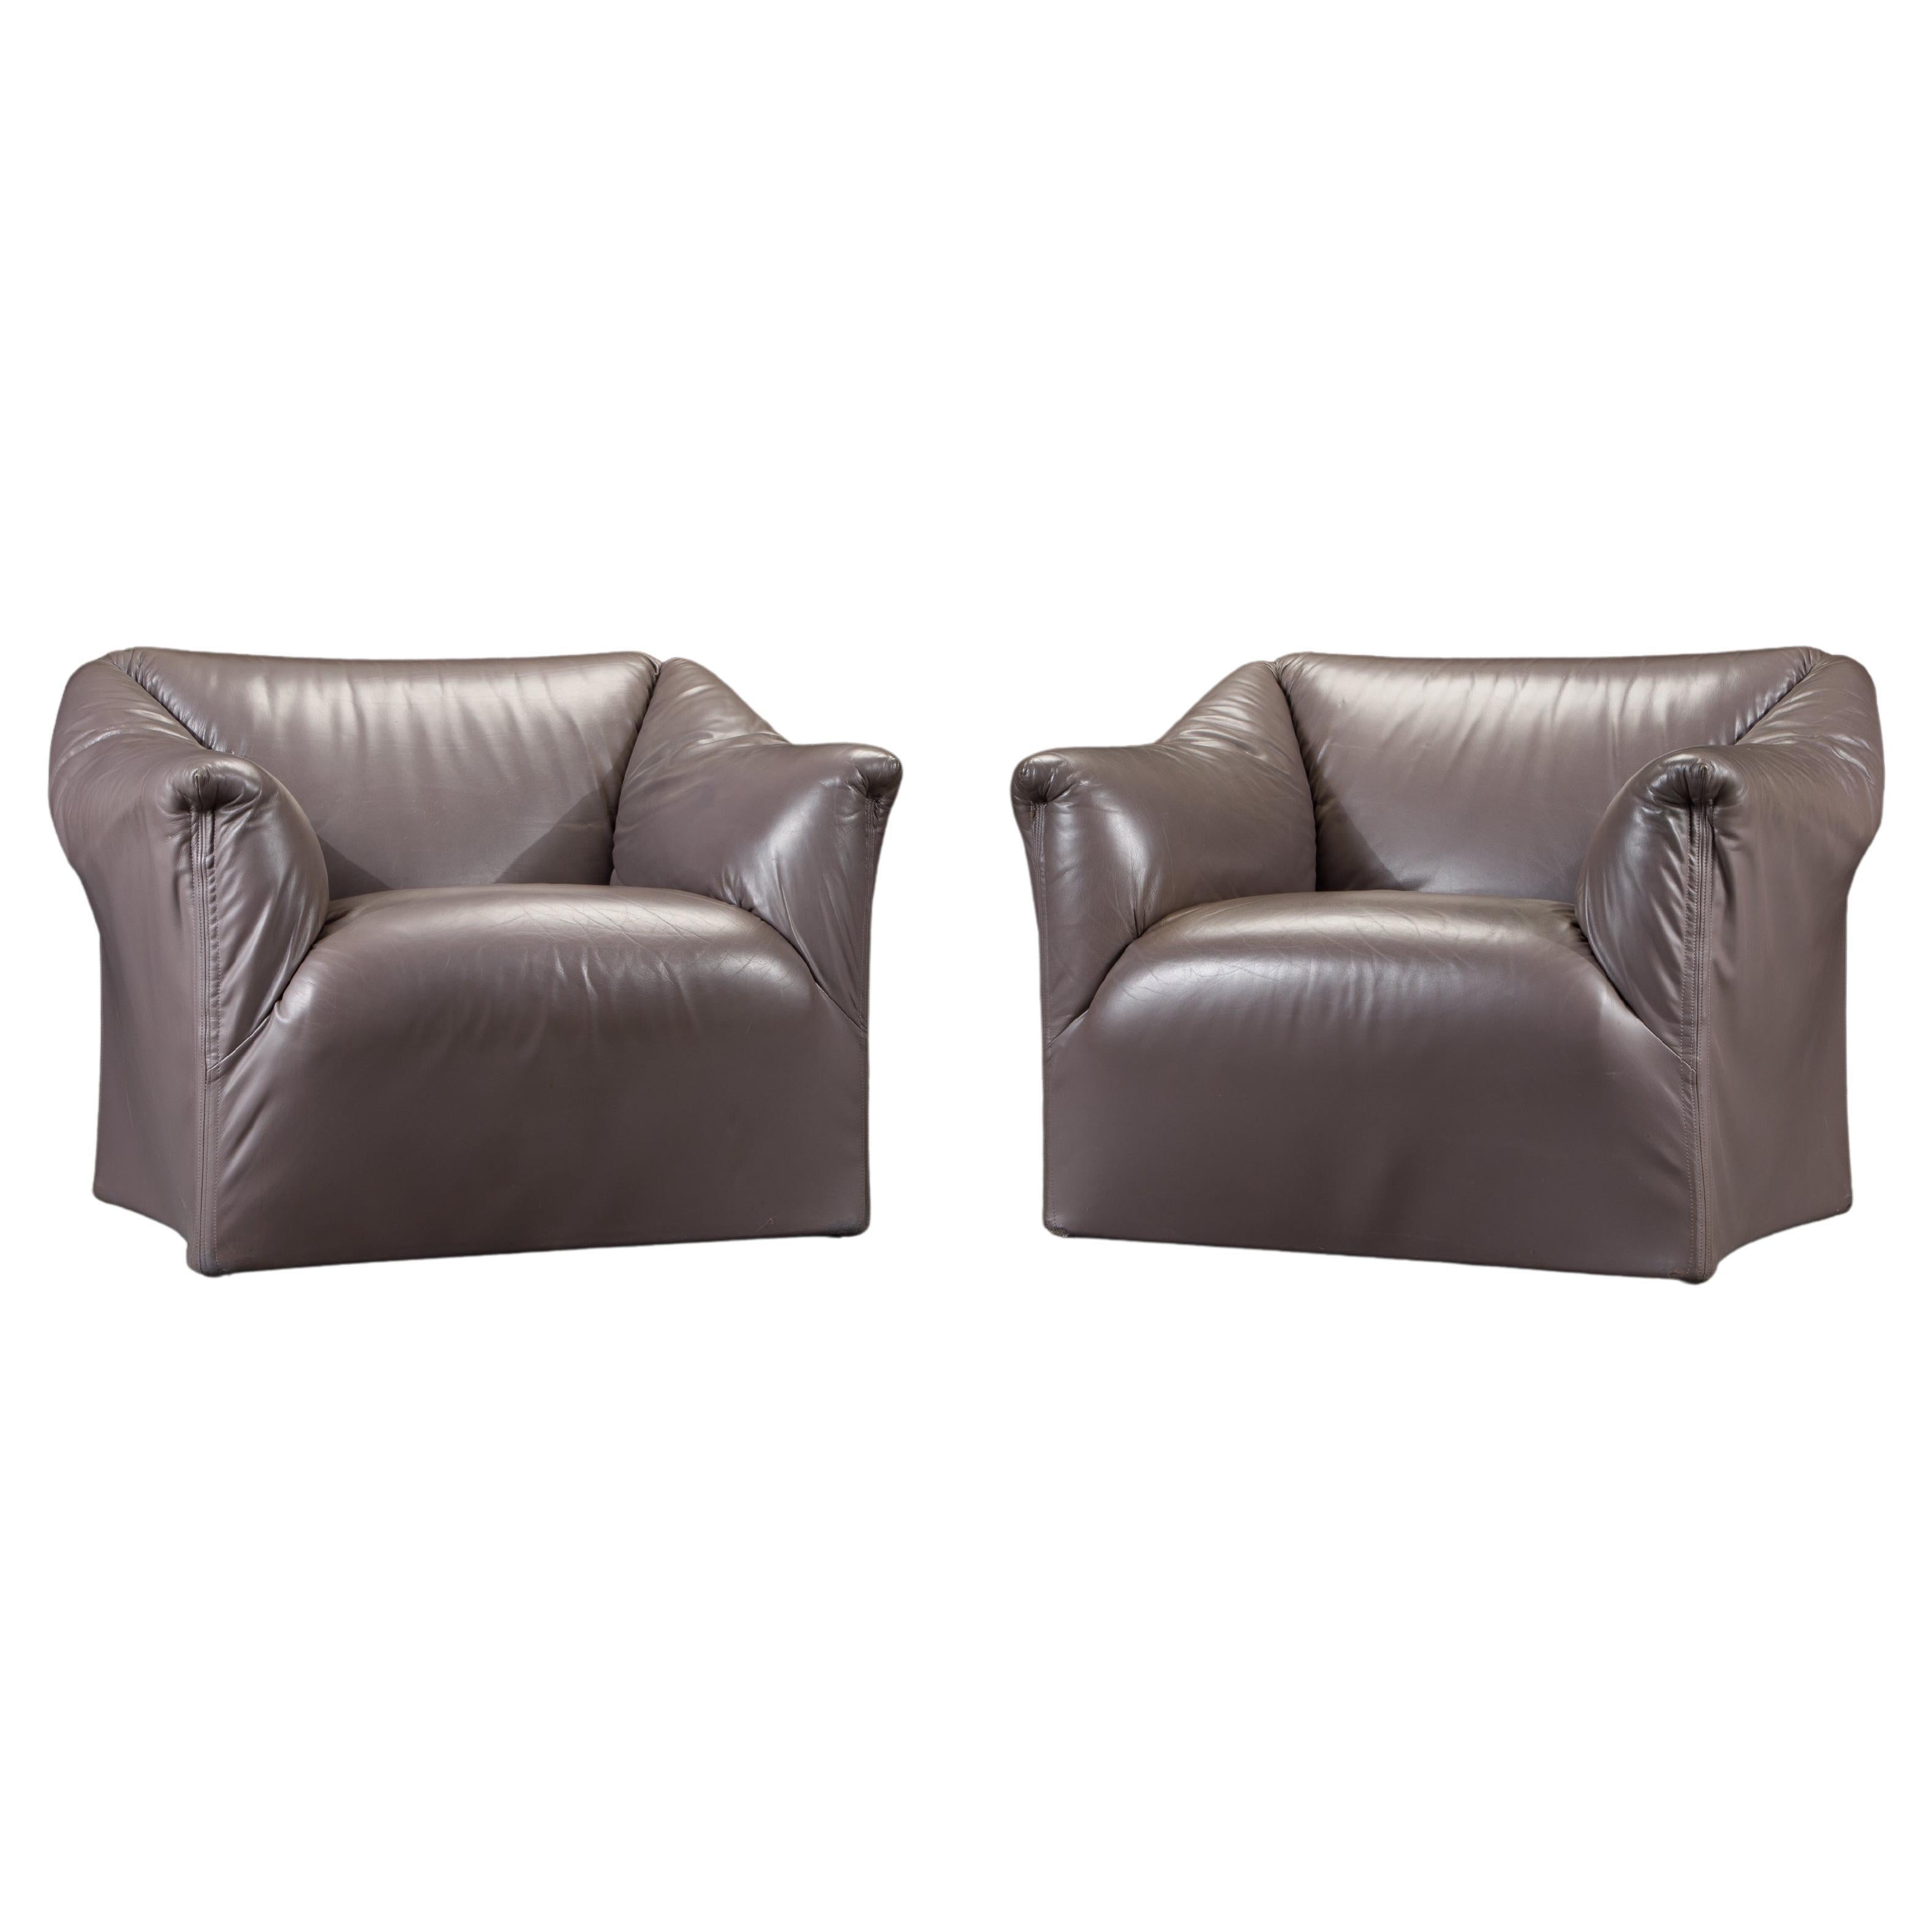 Mario Bellini Model 685 'Tentazione' Club Lounge Chairs in Leather, Signed